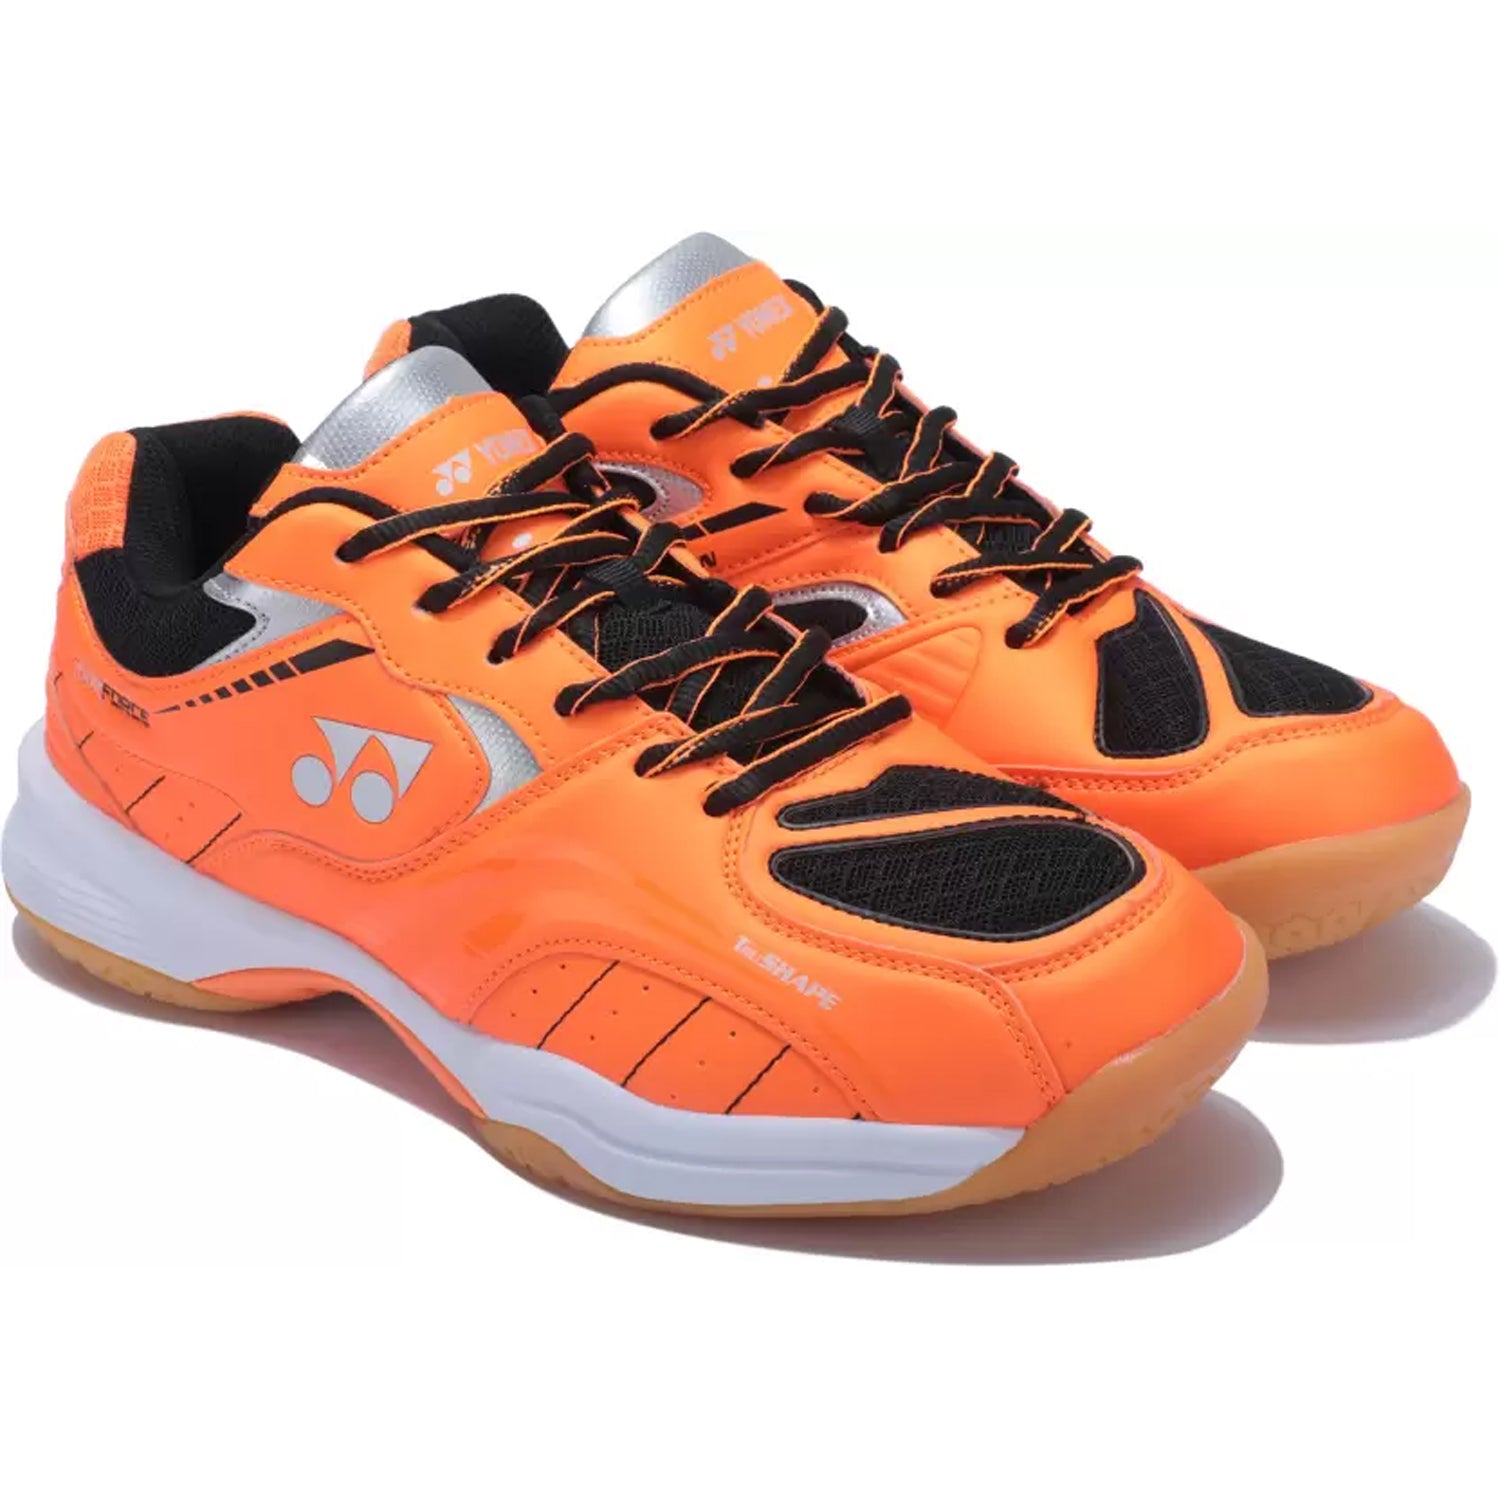 Yonex Tour Force Non Marking Badminton Shoes - Bright Orange/White - Best Price online Prokicksports.com